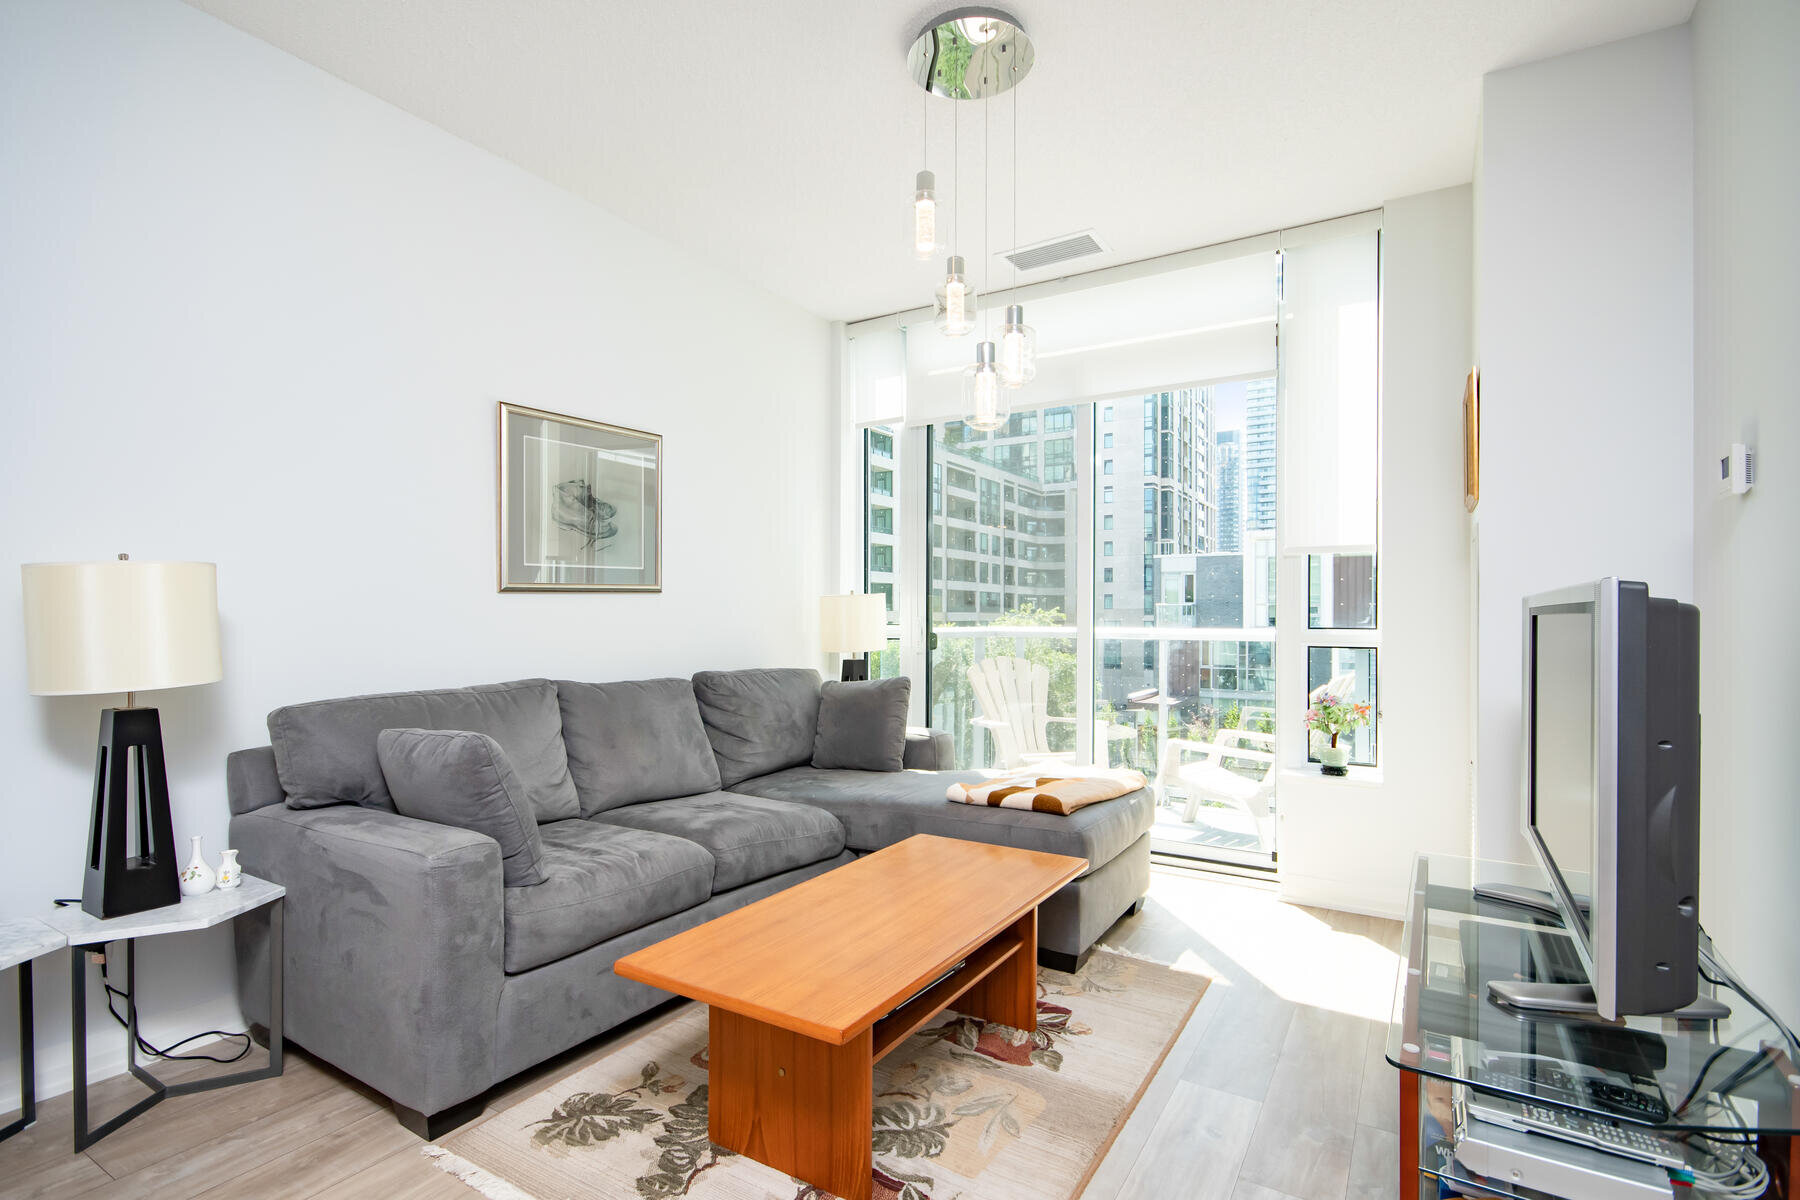 101 Erskine 324 Toronto ON M4P 0C5 Canada-010-007-Living Room-MLS_Size.jpg